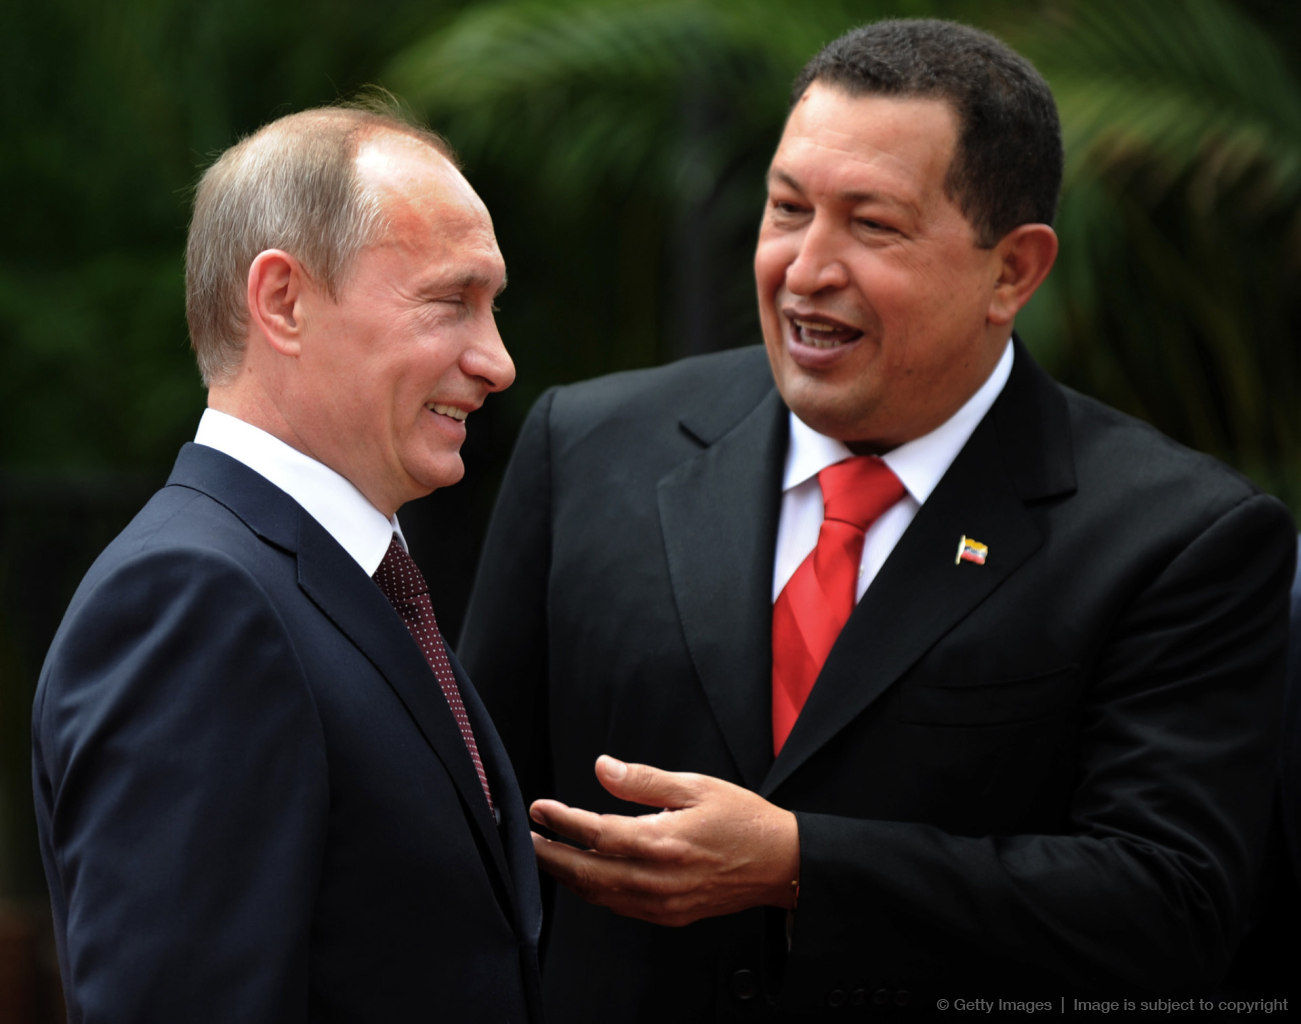 Реферат: Політичний портрет: Уго Чавес